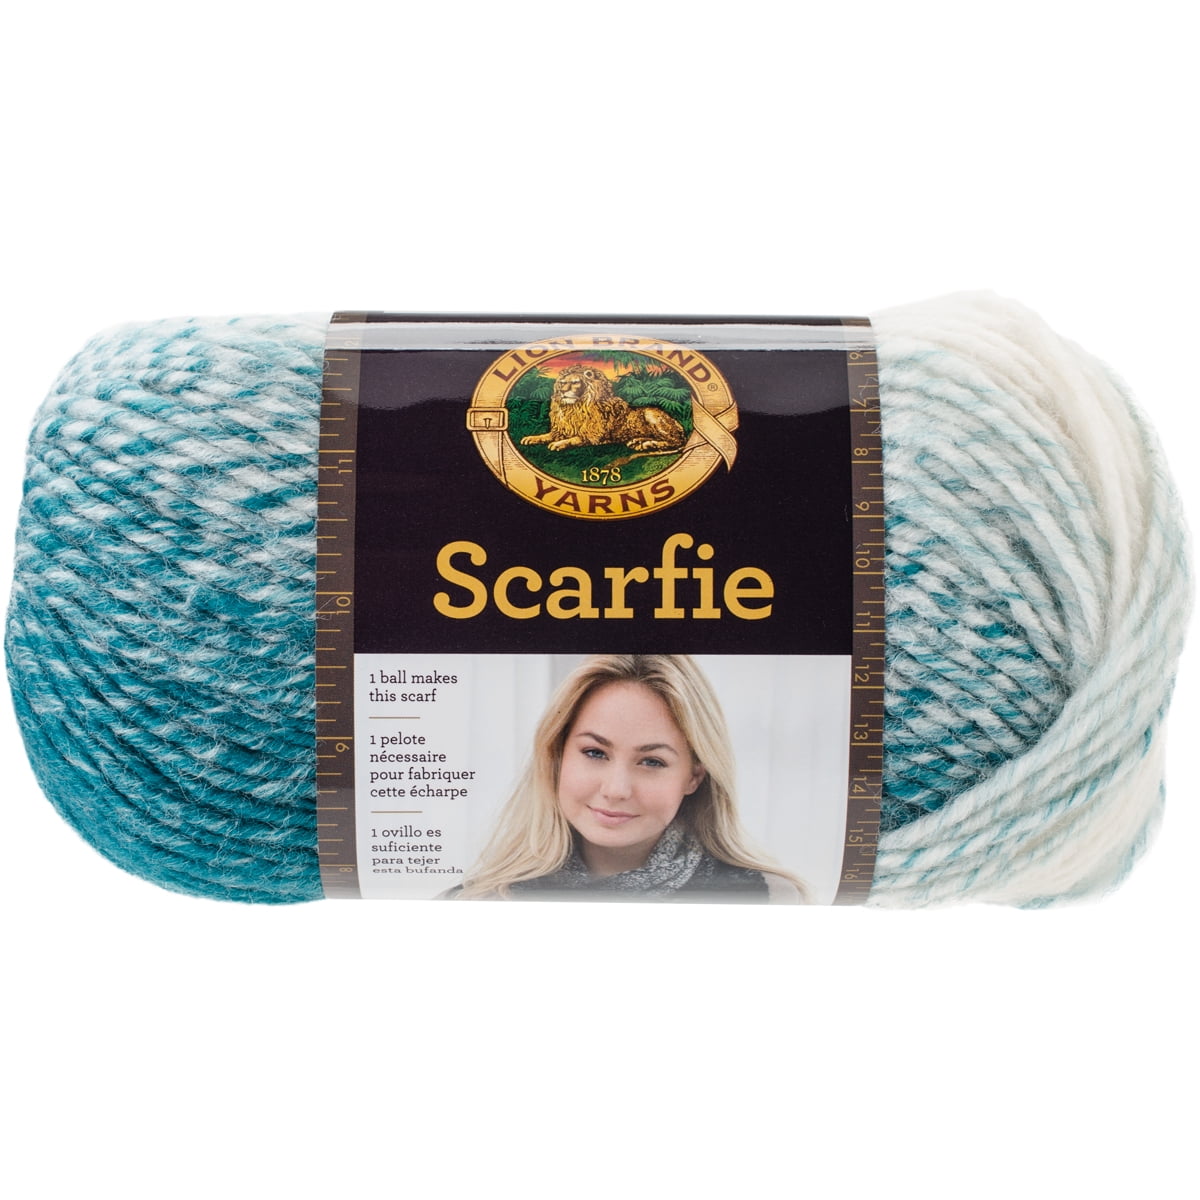 Lion Brand Scarfie Yarn - Cream/Teal, 312 yds